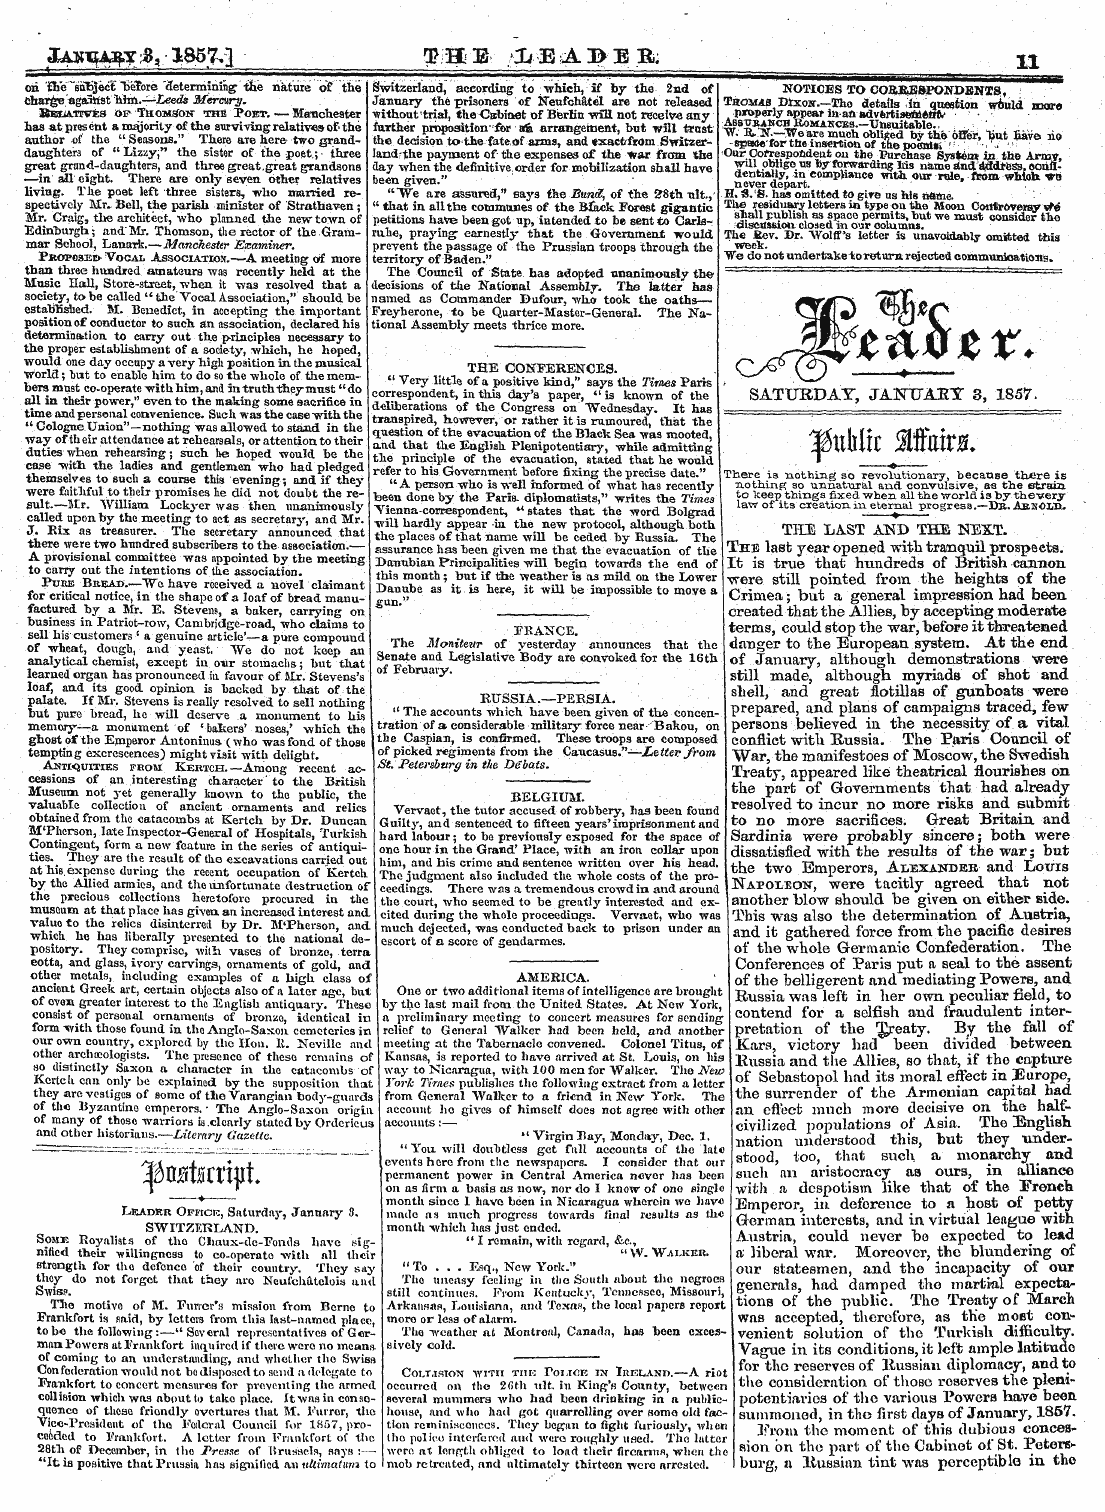 Leader (1850-1860): jS F Y, 2nd edition - Saturday, Jaktjakt 3, 1857.